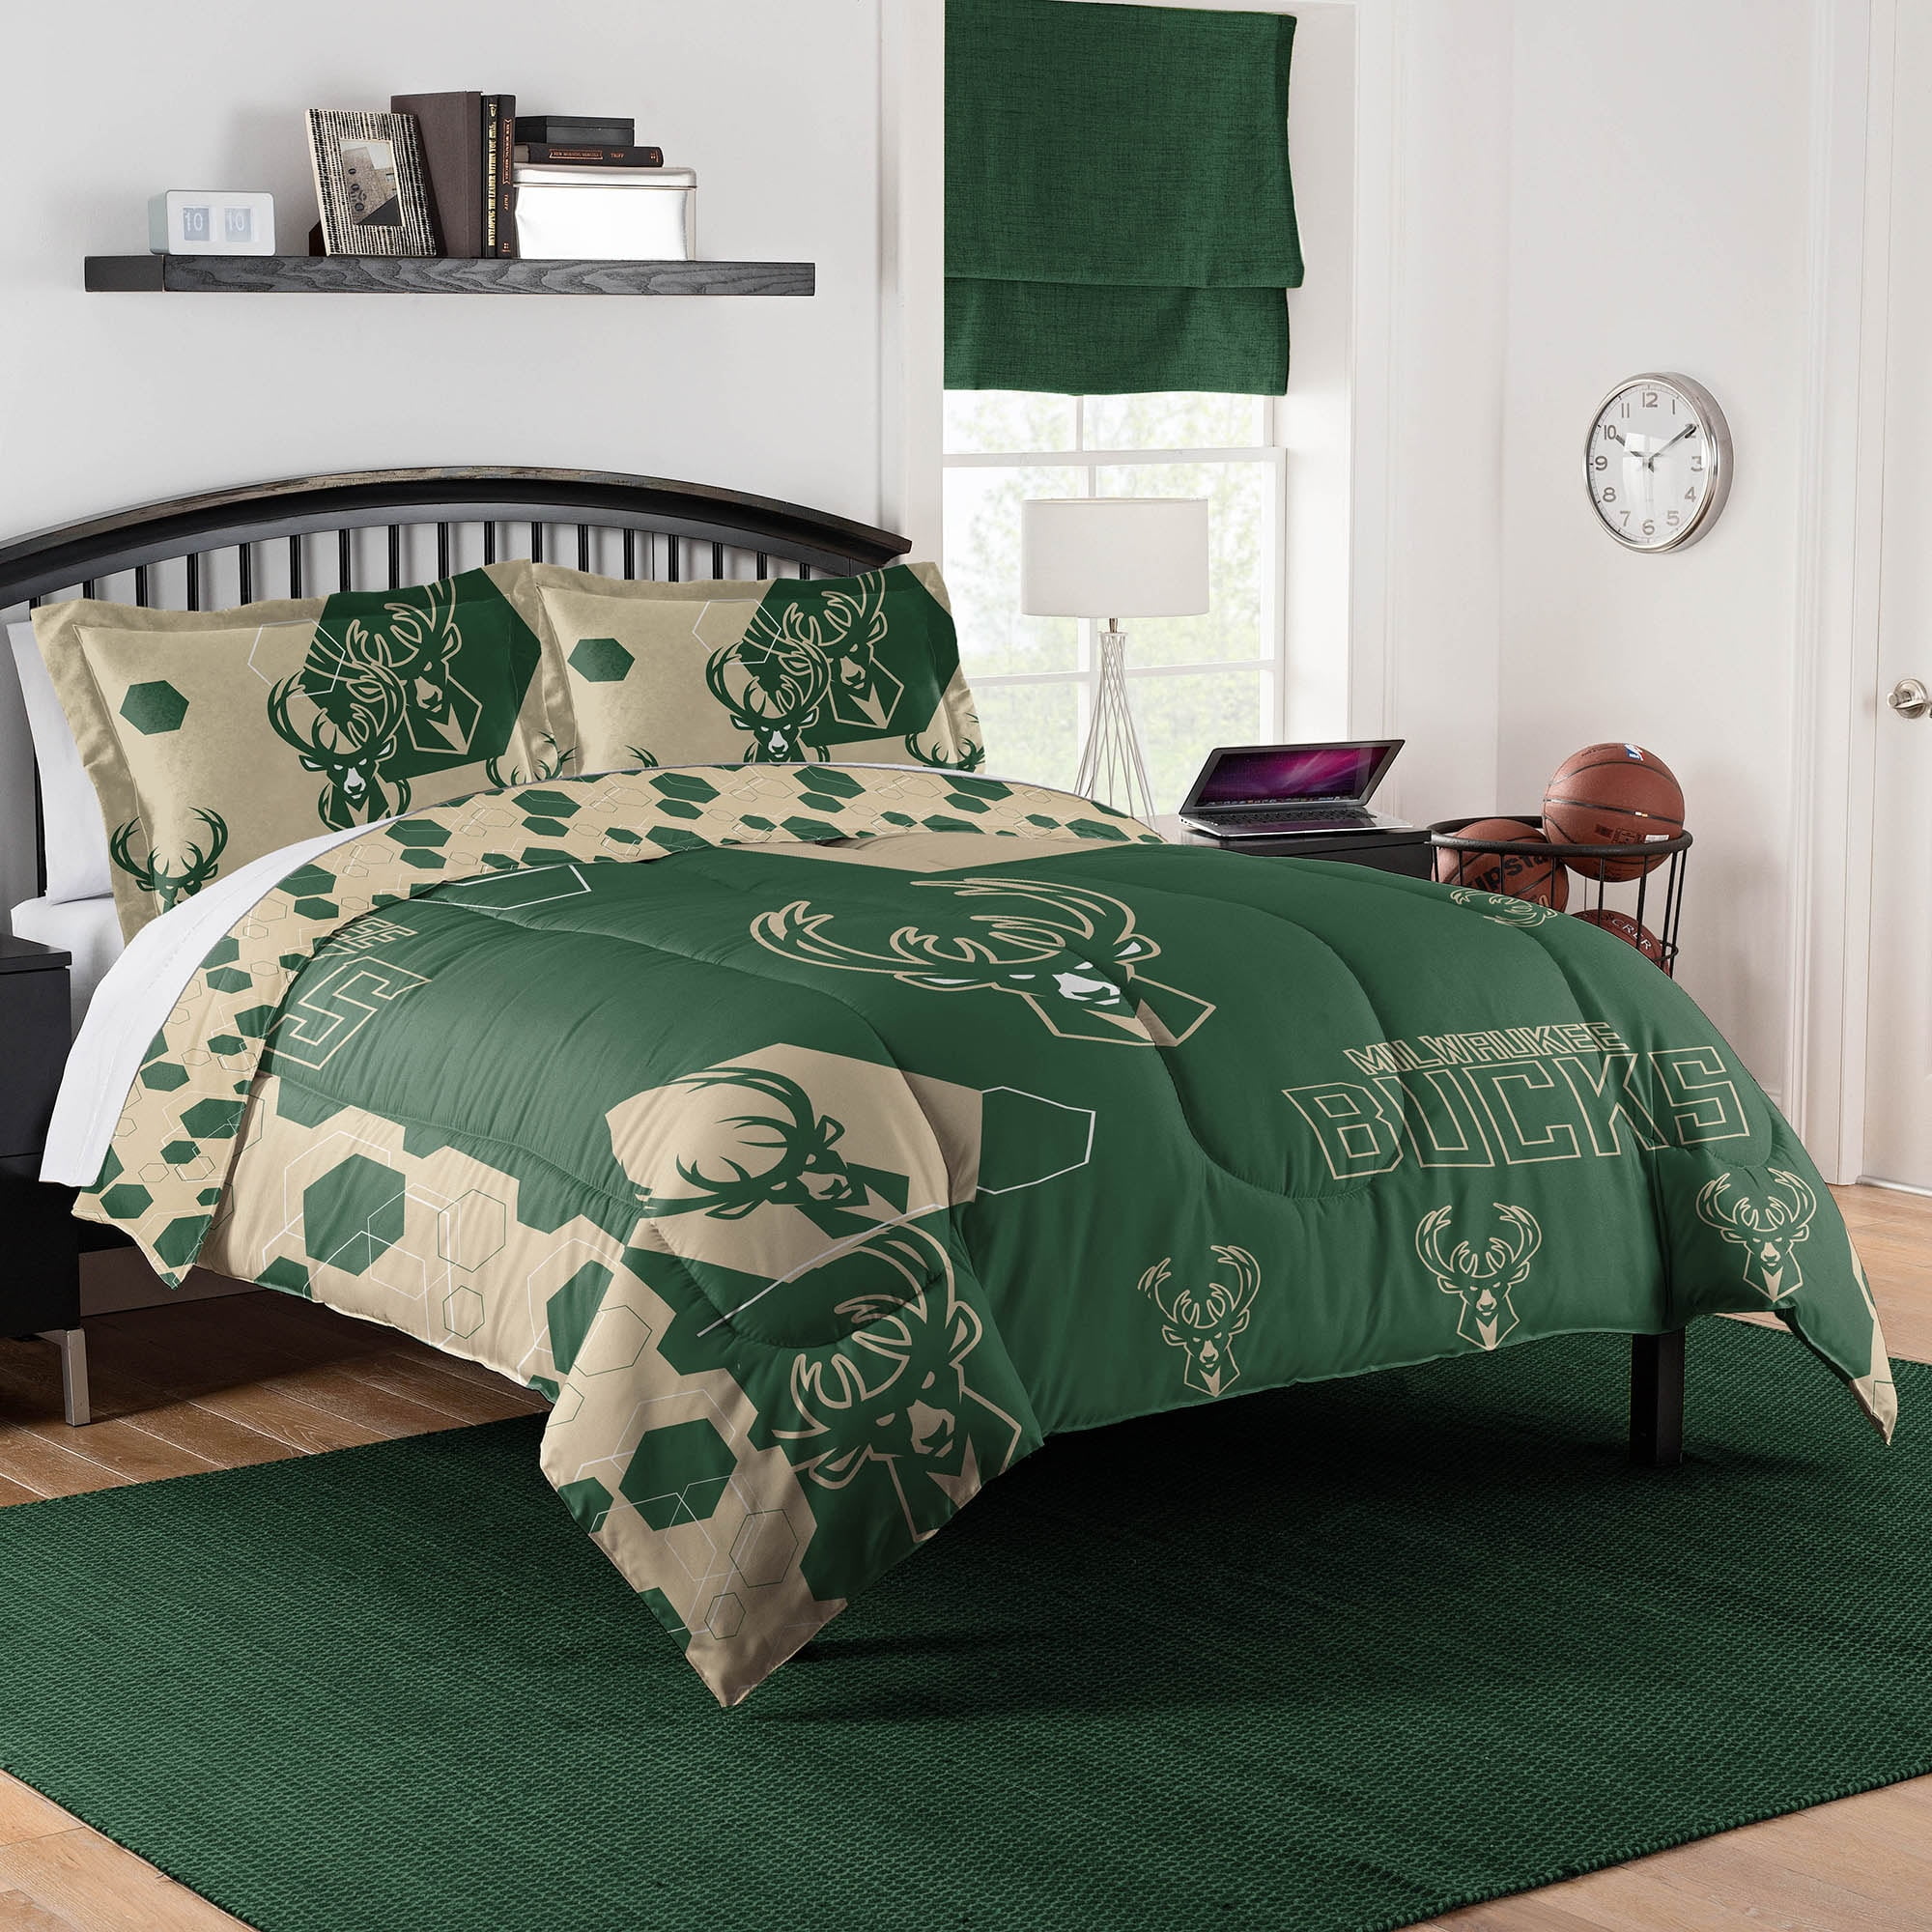 SACRAMENTO KINGS Denim Comforter & Sheet Set Combo-Twin Size 